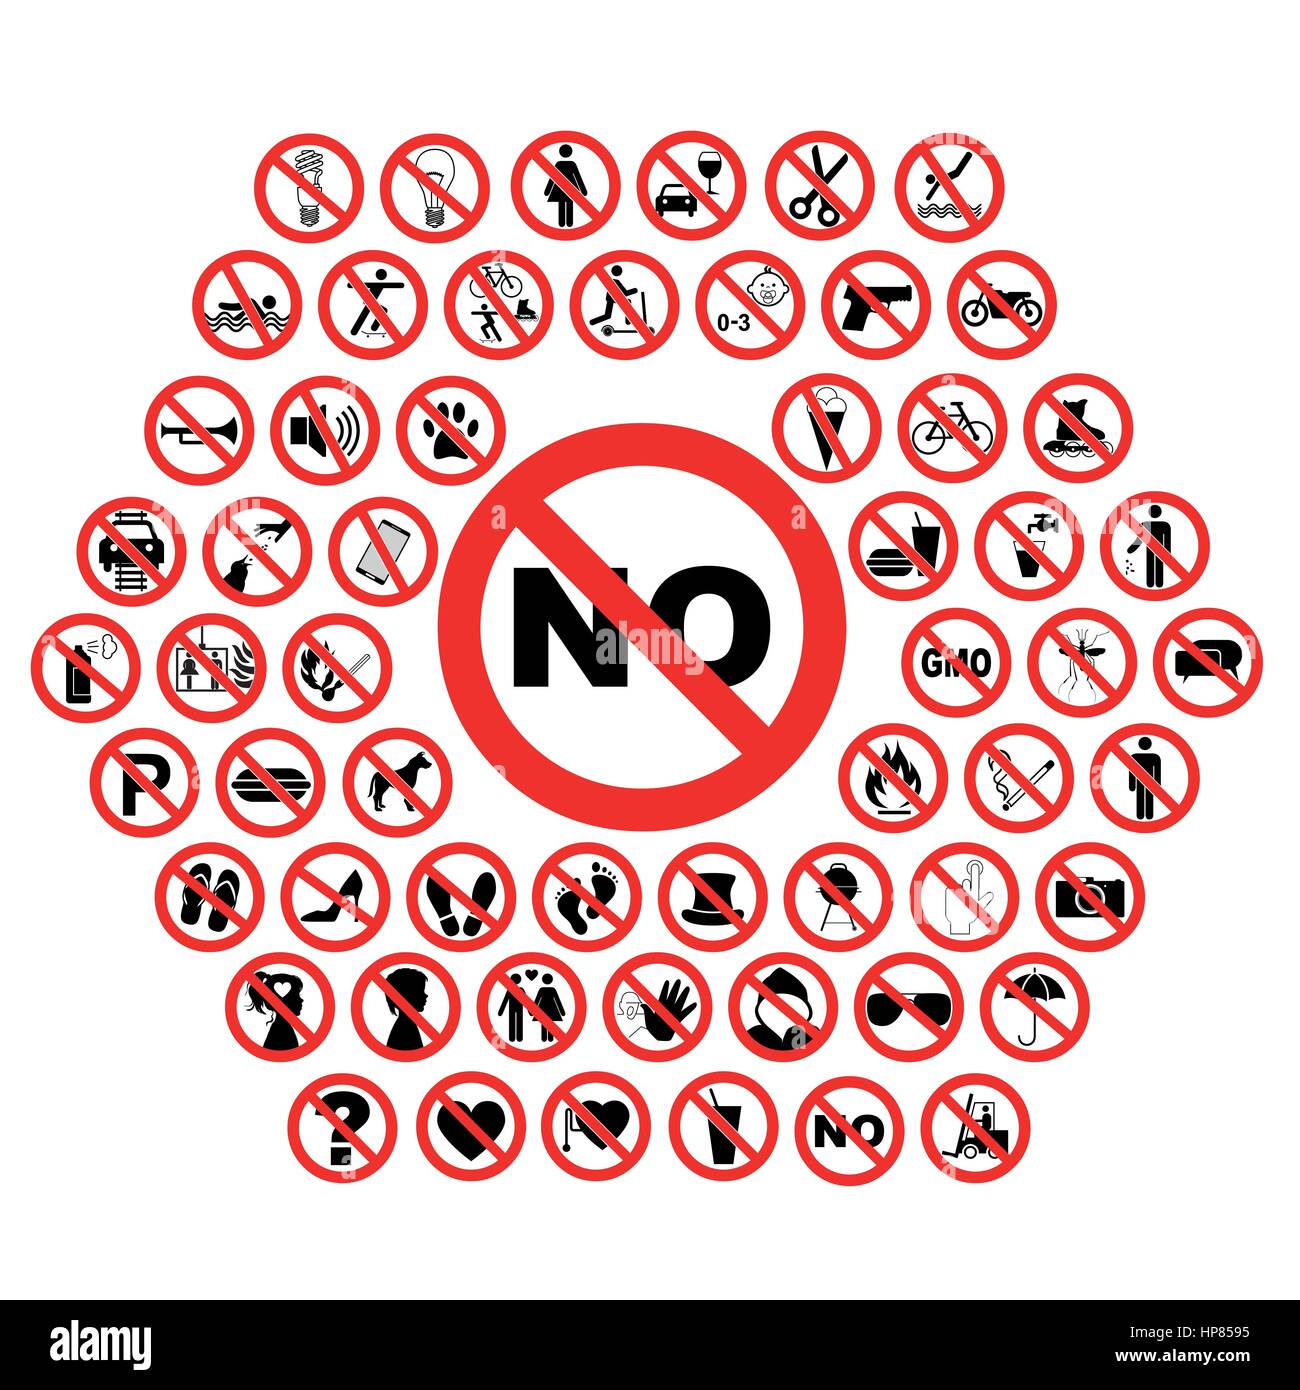 forbidden sign - prohibition signs - vector set Stock Vector